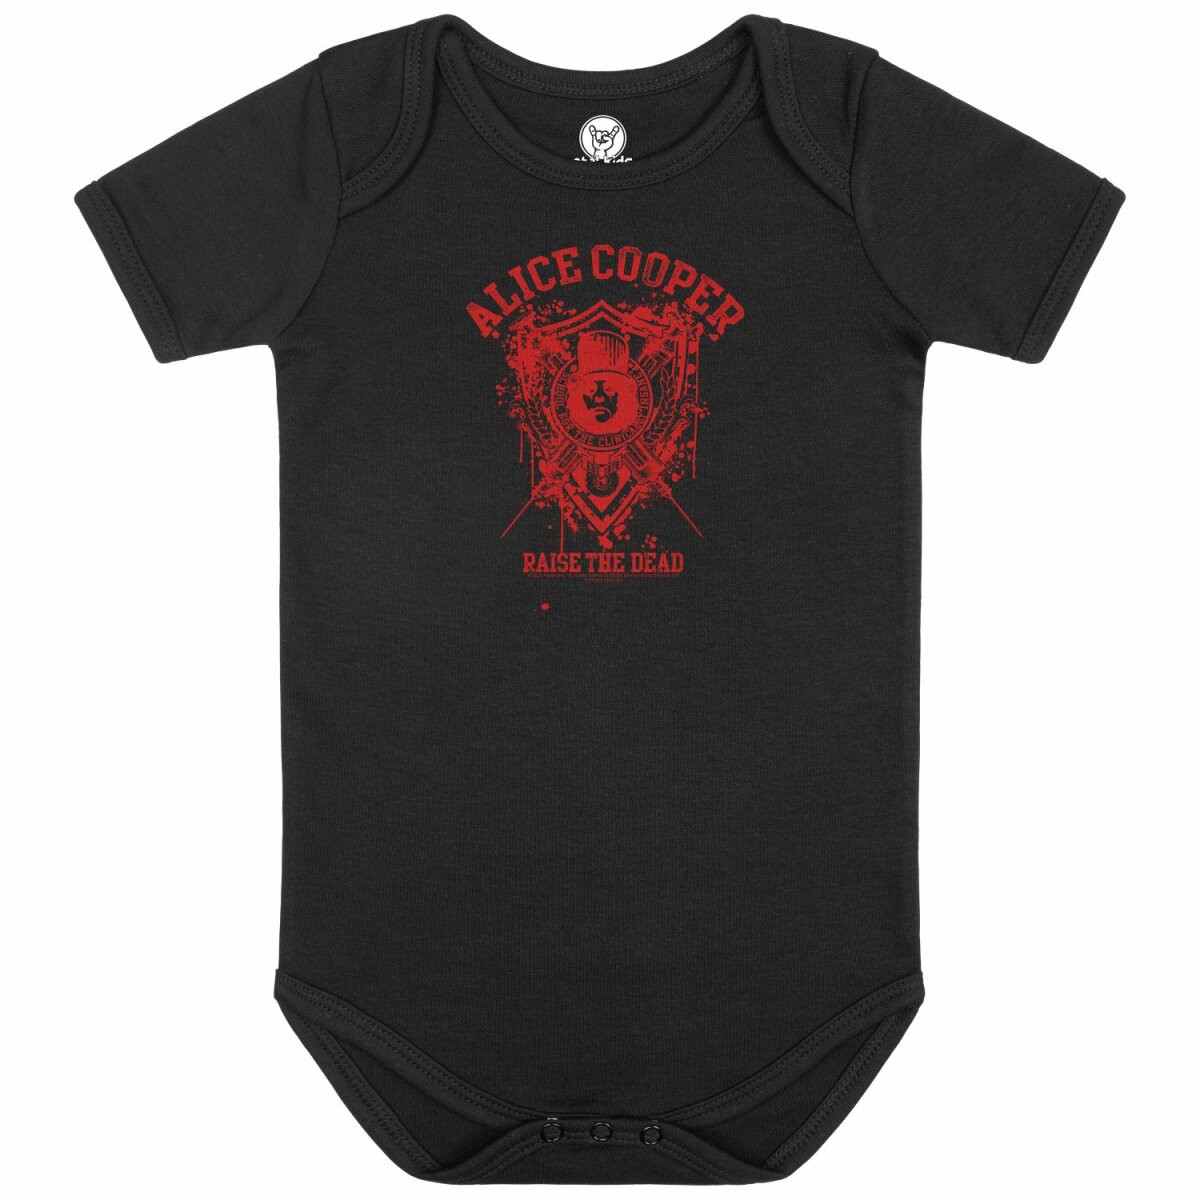 Alice Cooper Baby bodysuit - (Raise the Dead)